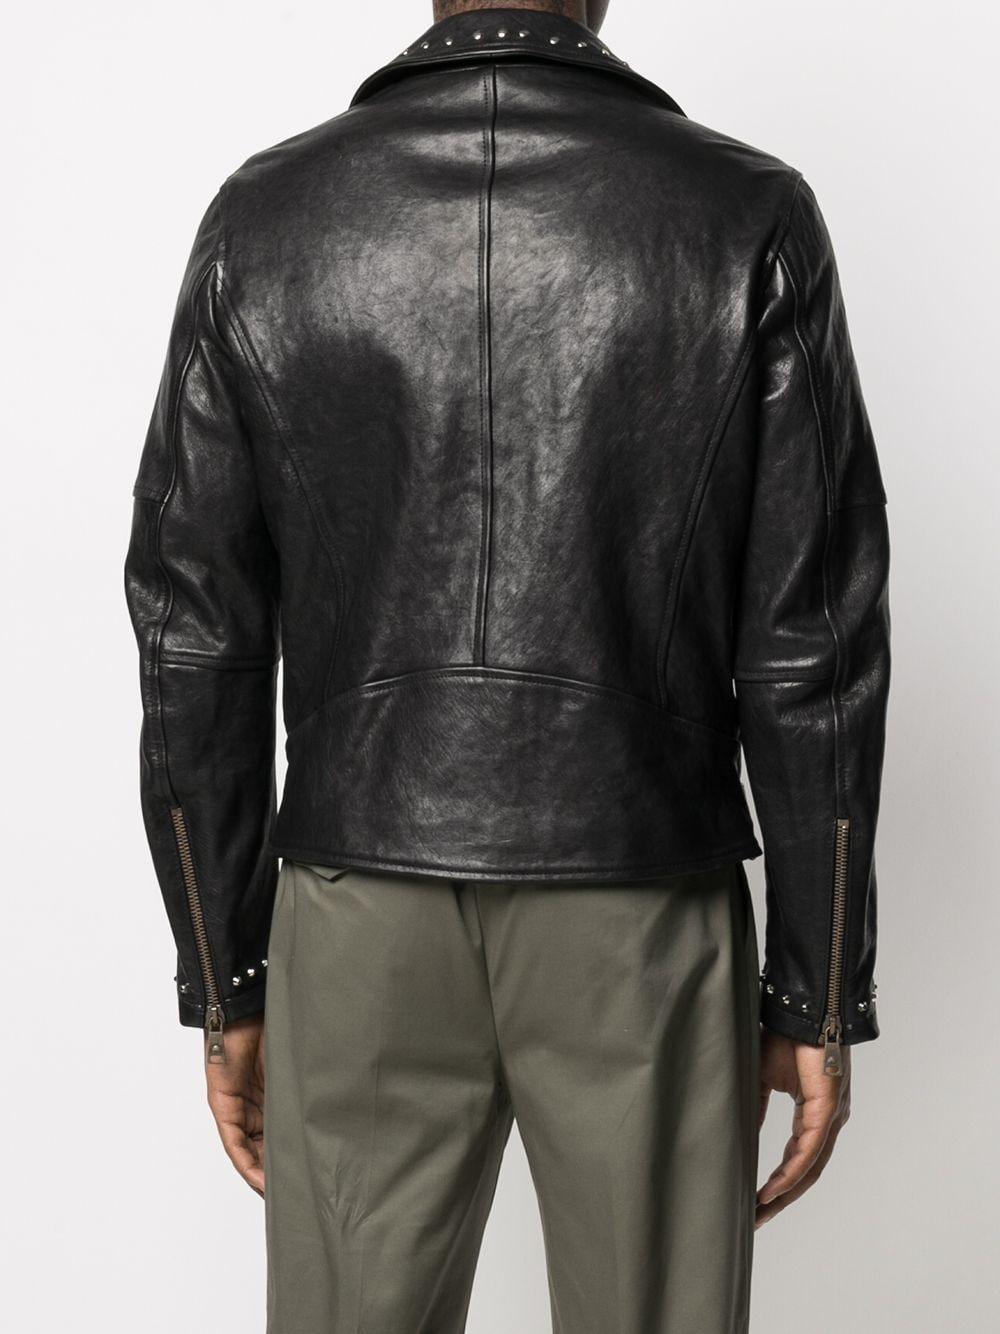 Gabriele Pasini Leather Studded Biker Jacket in Black for Men - Lyst